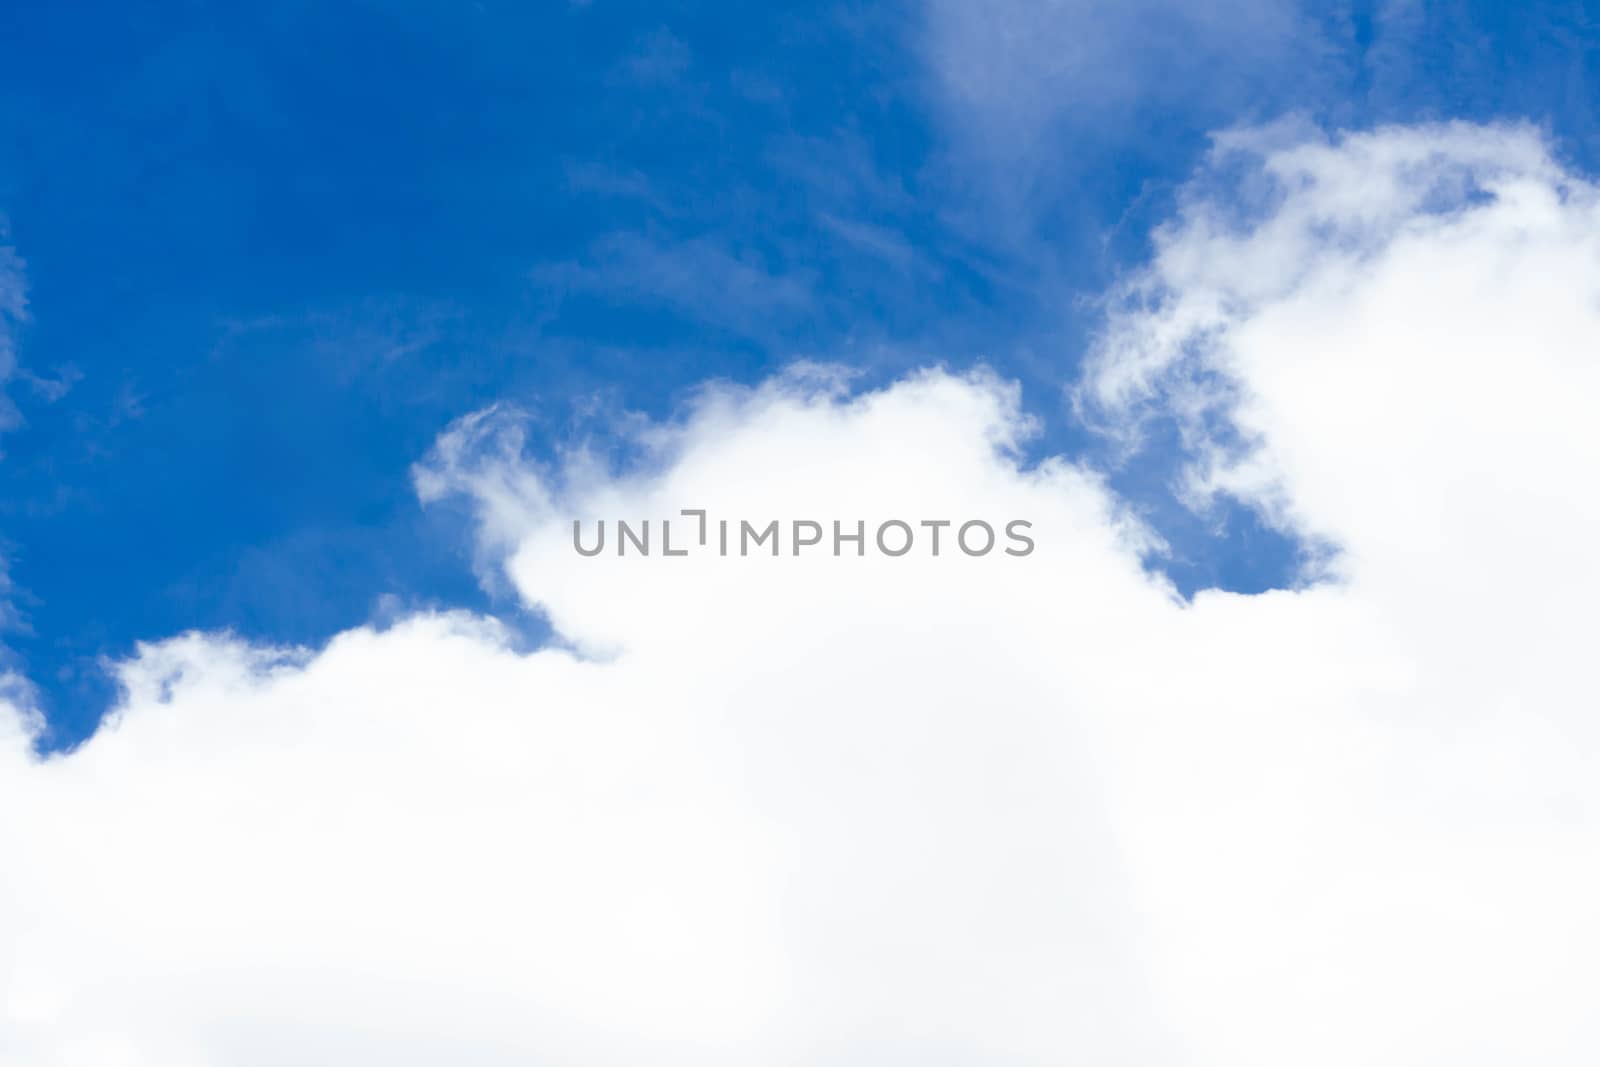 Blur clouds on the sky with sun light by pt.pongsak@gmail.com